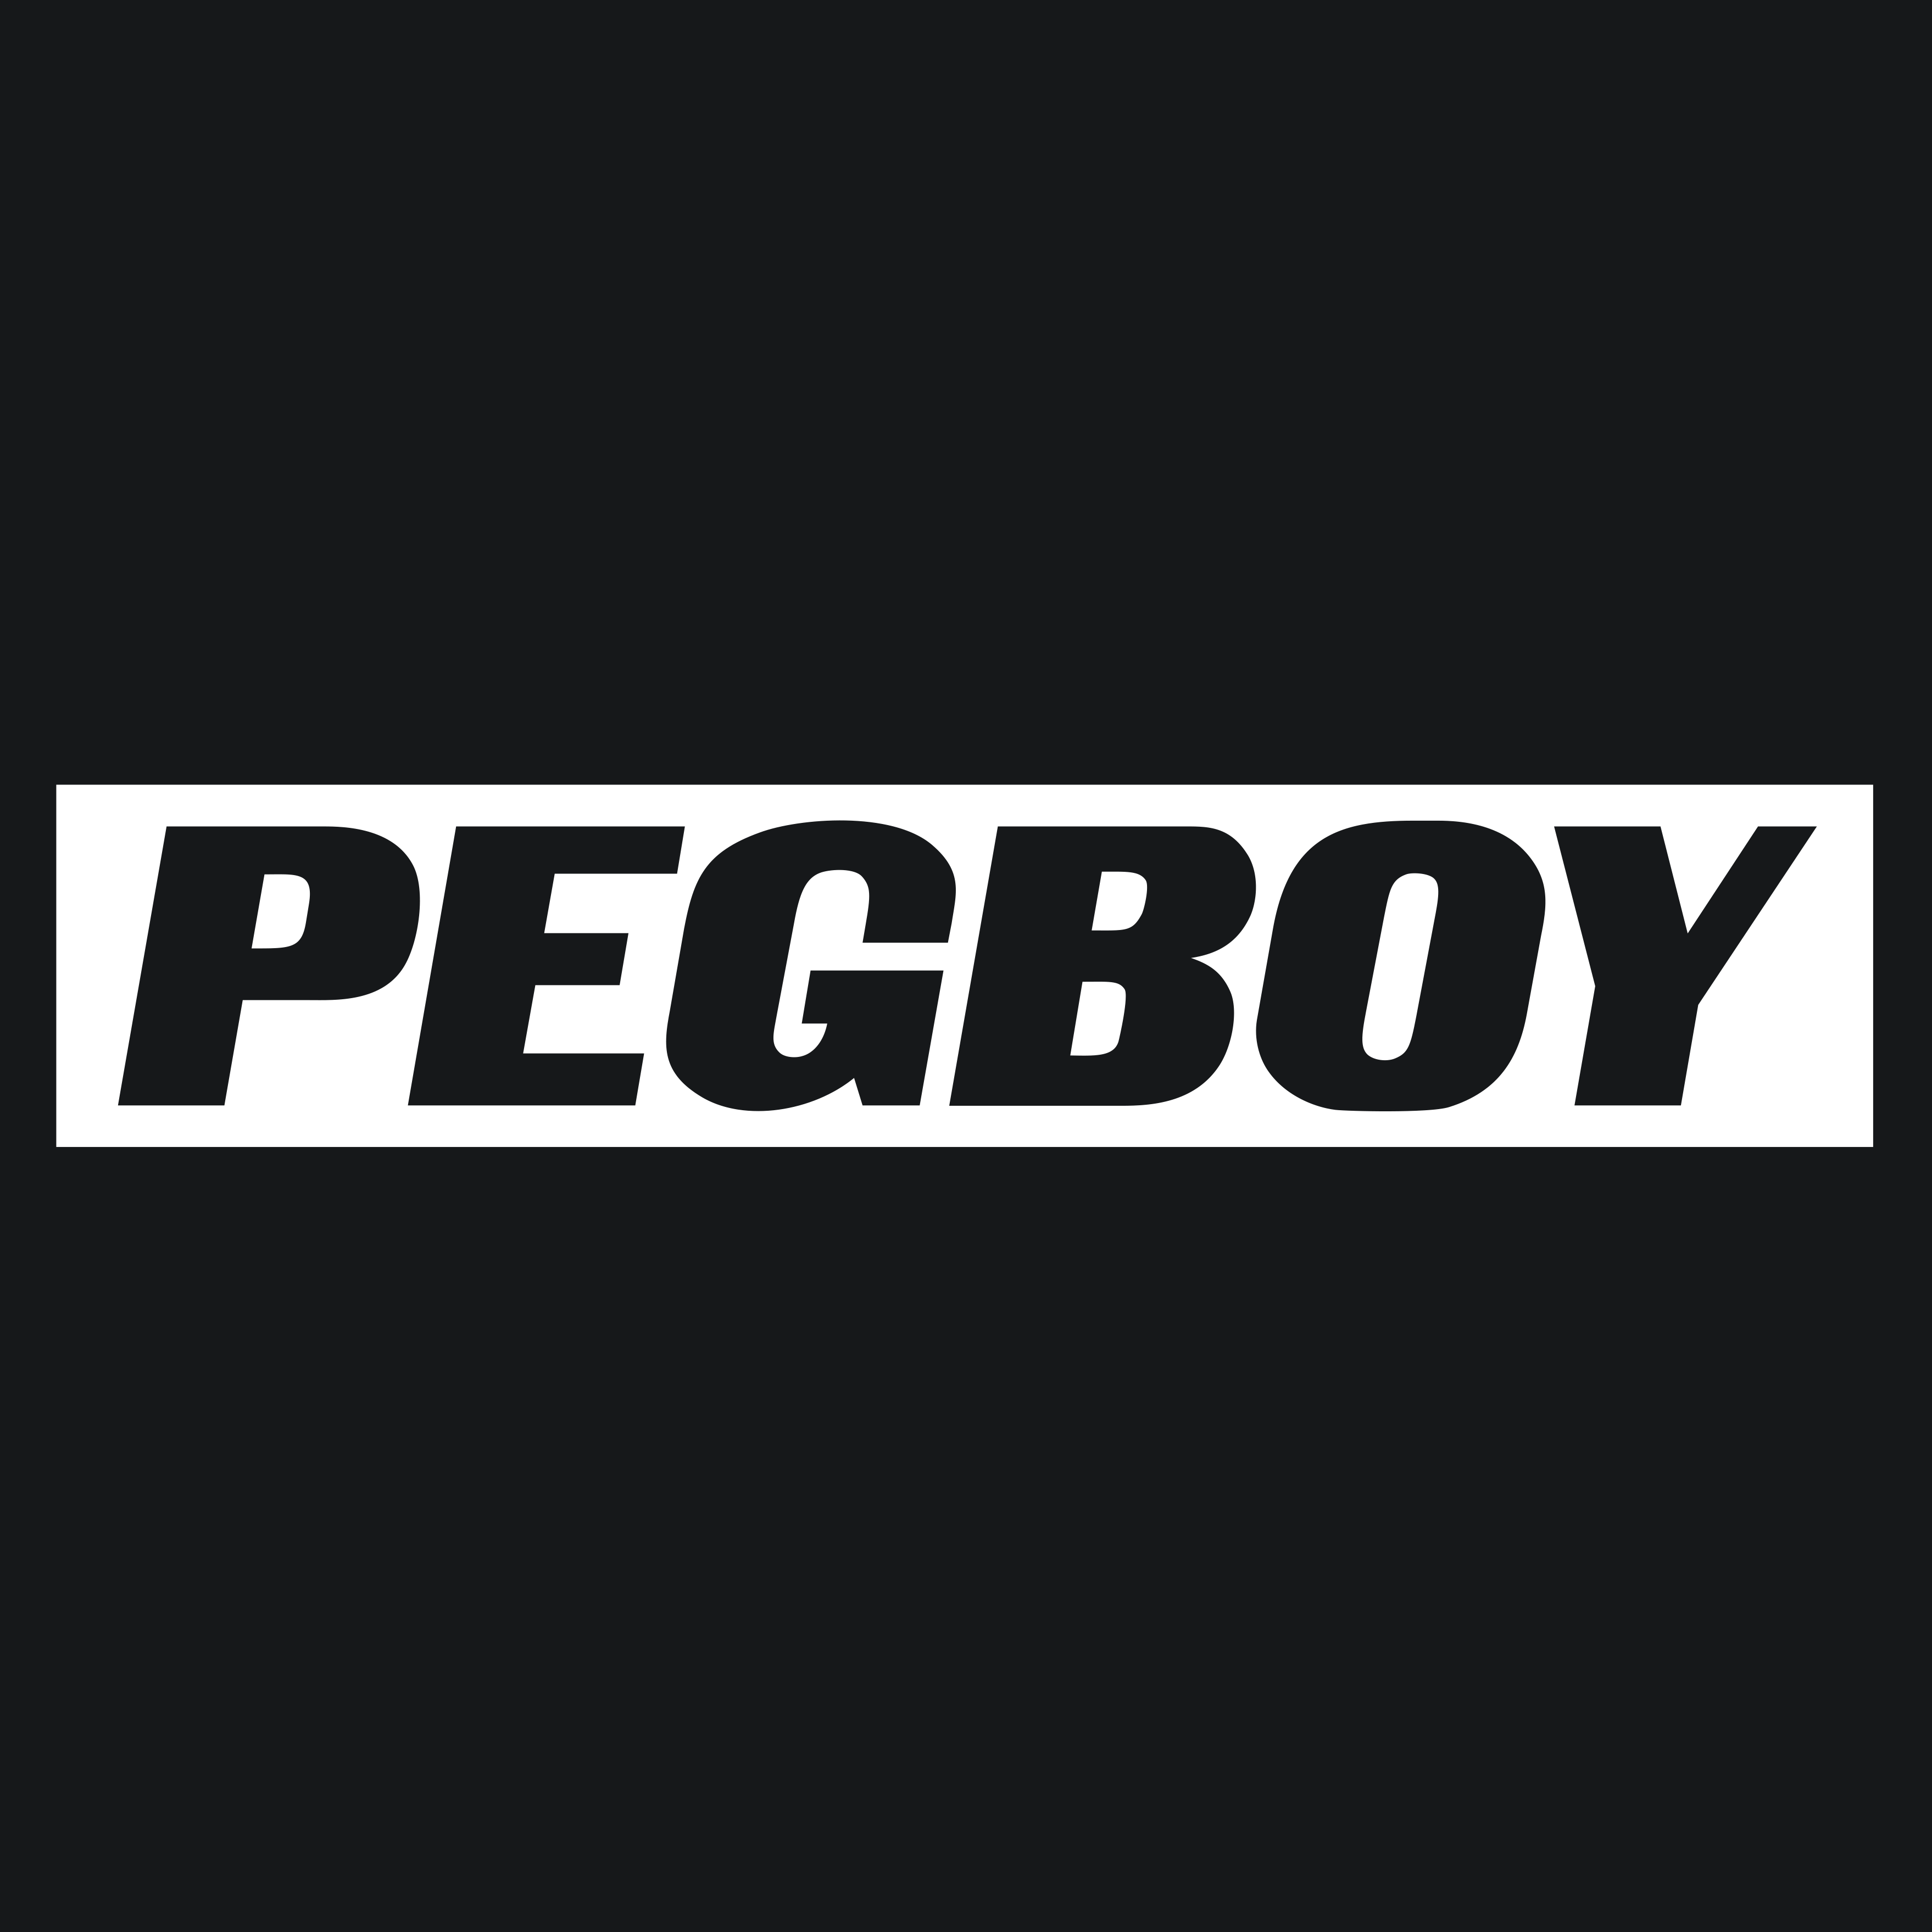 Pegboy